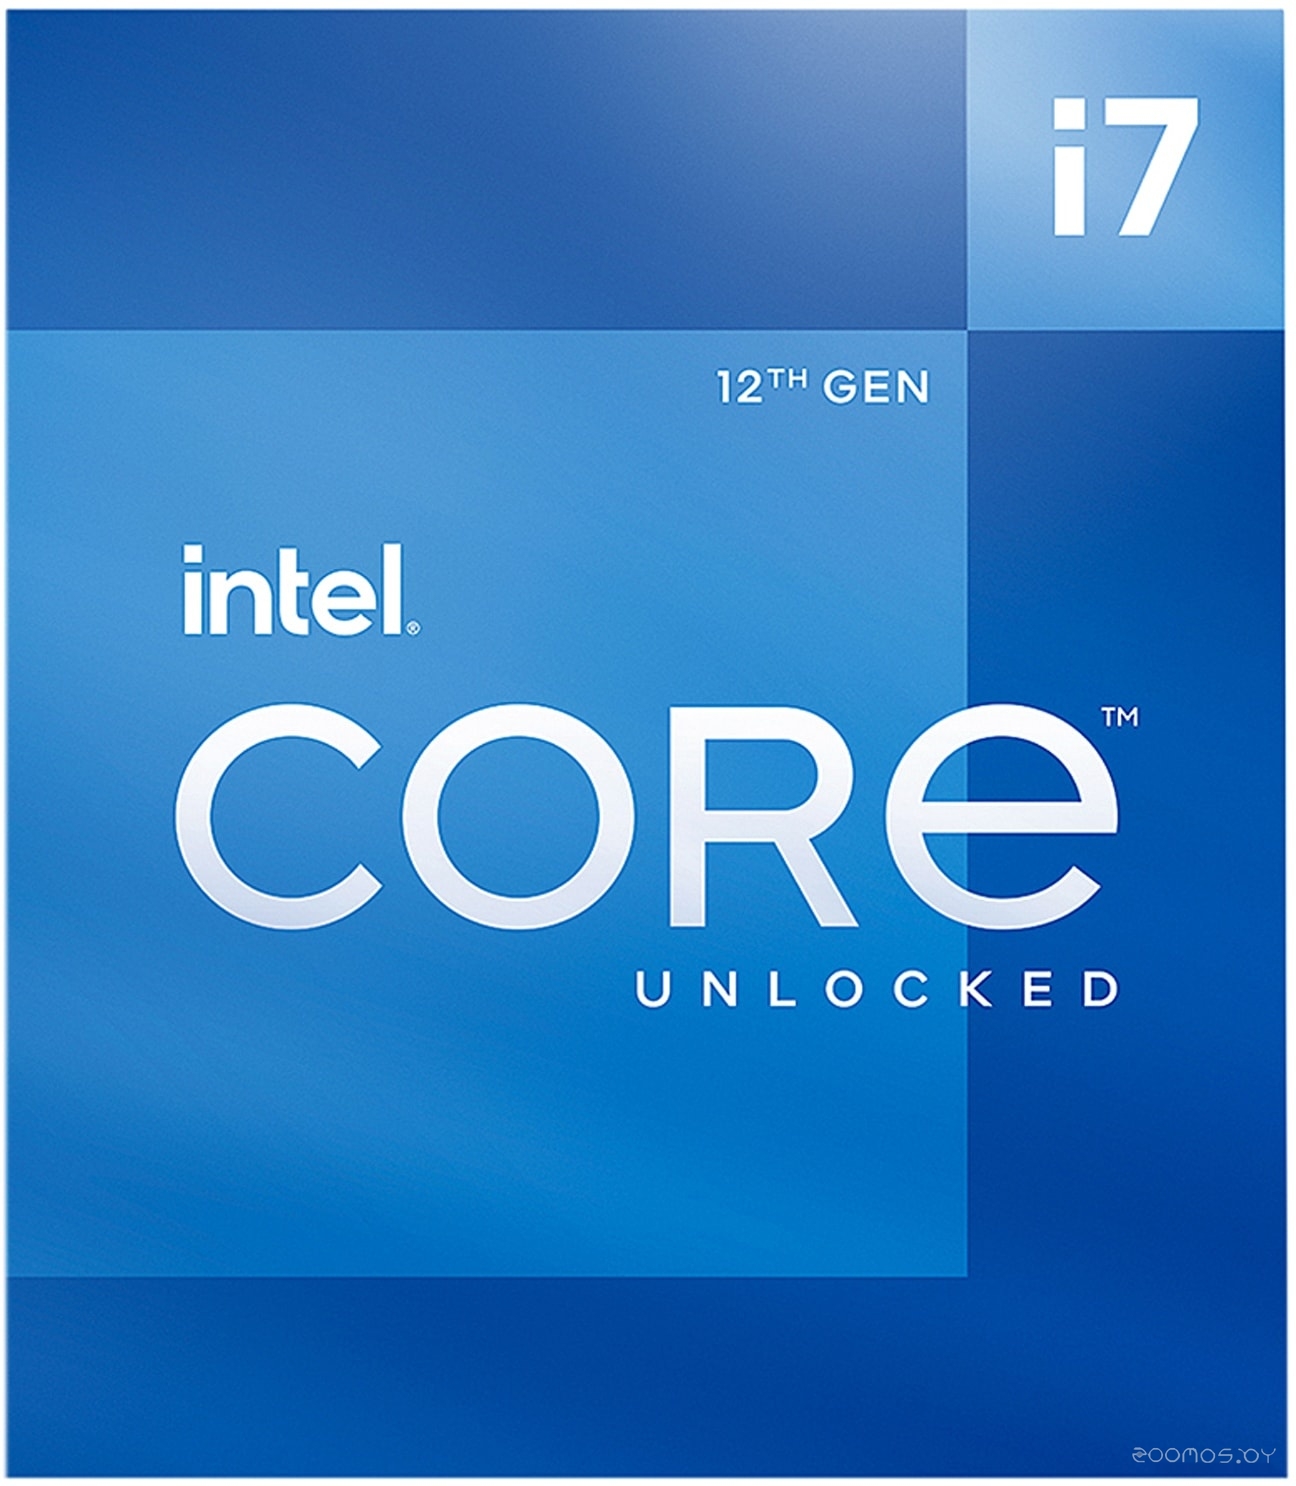  Intel Core i7-12700K     